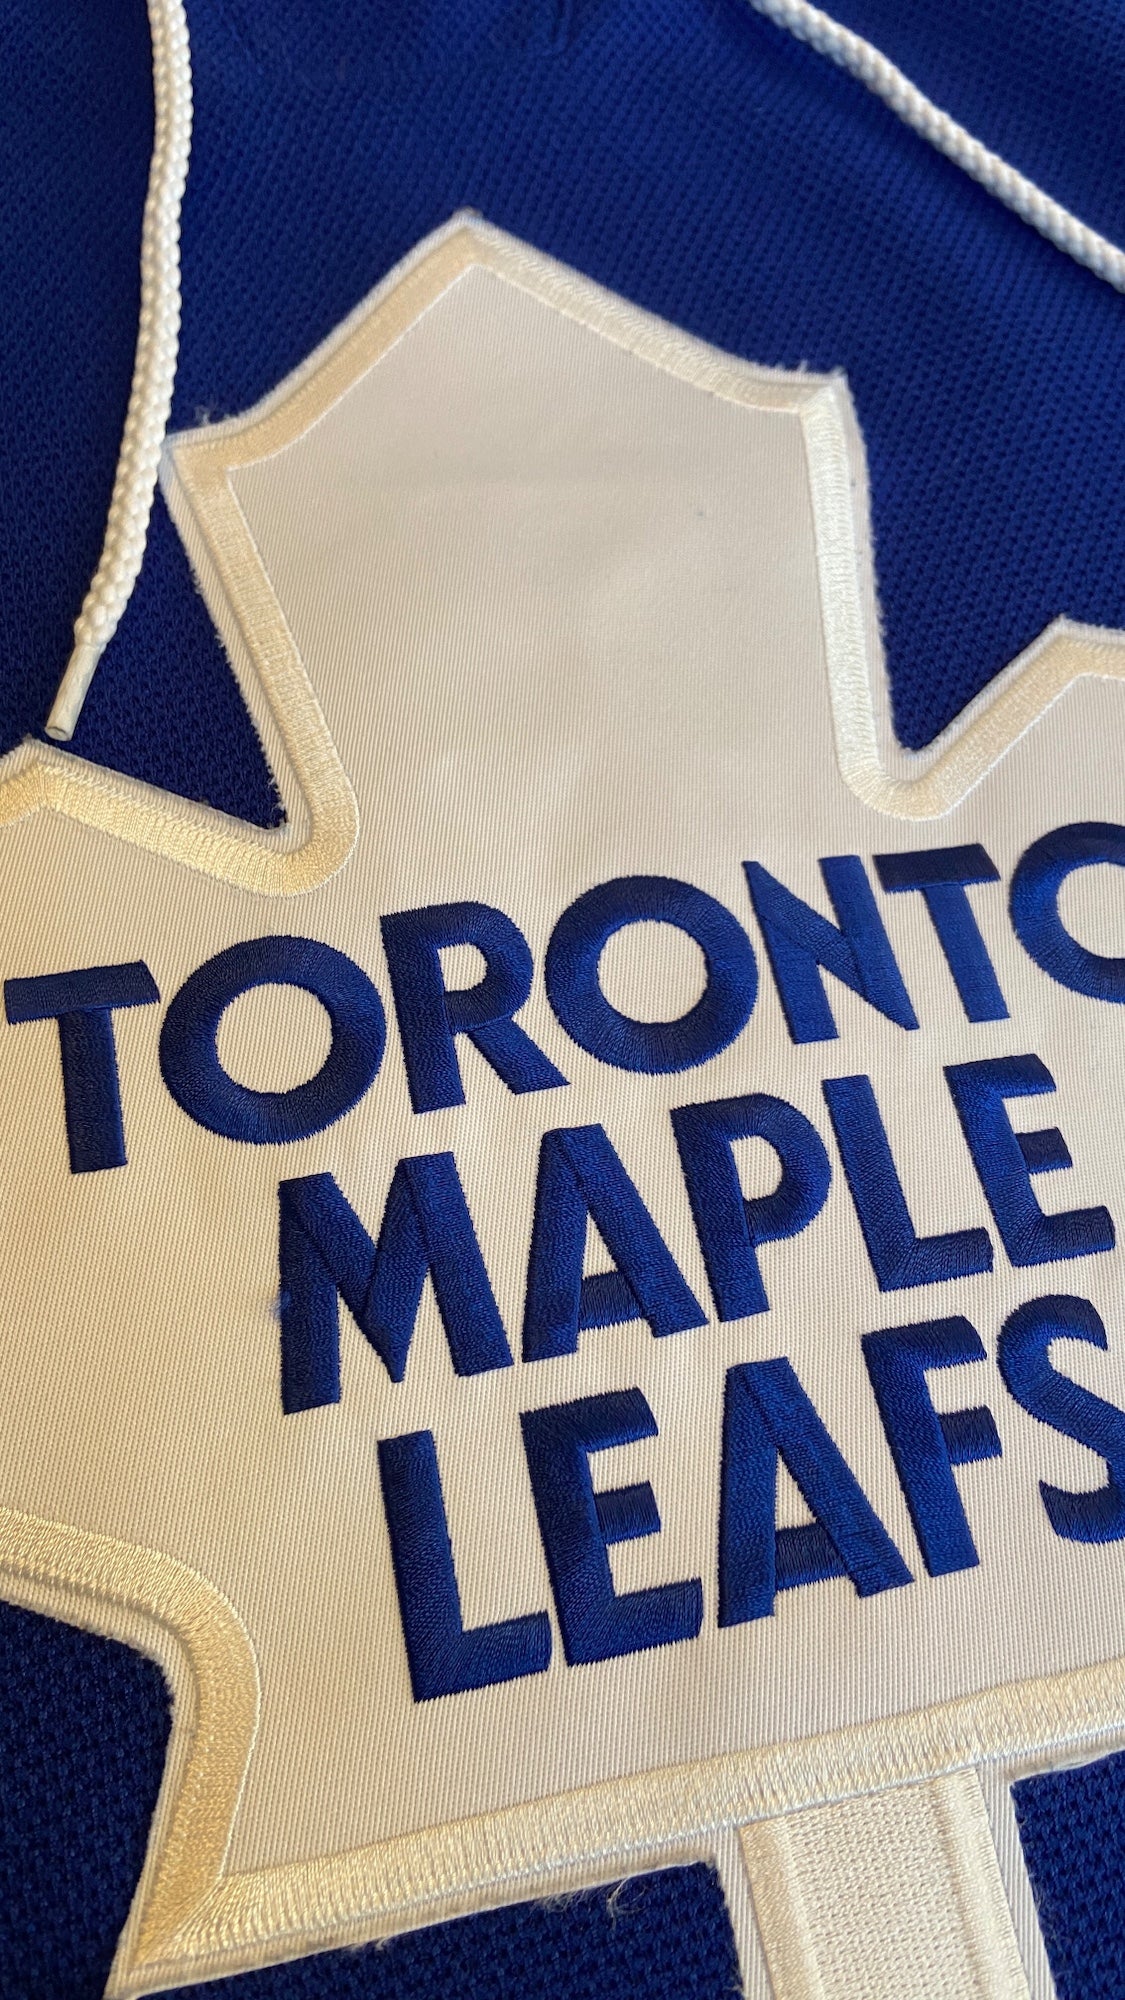 Reebok Toronto Maple Leafs Premier Jersey - Third - Mens